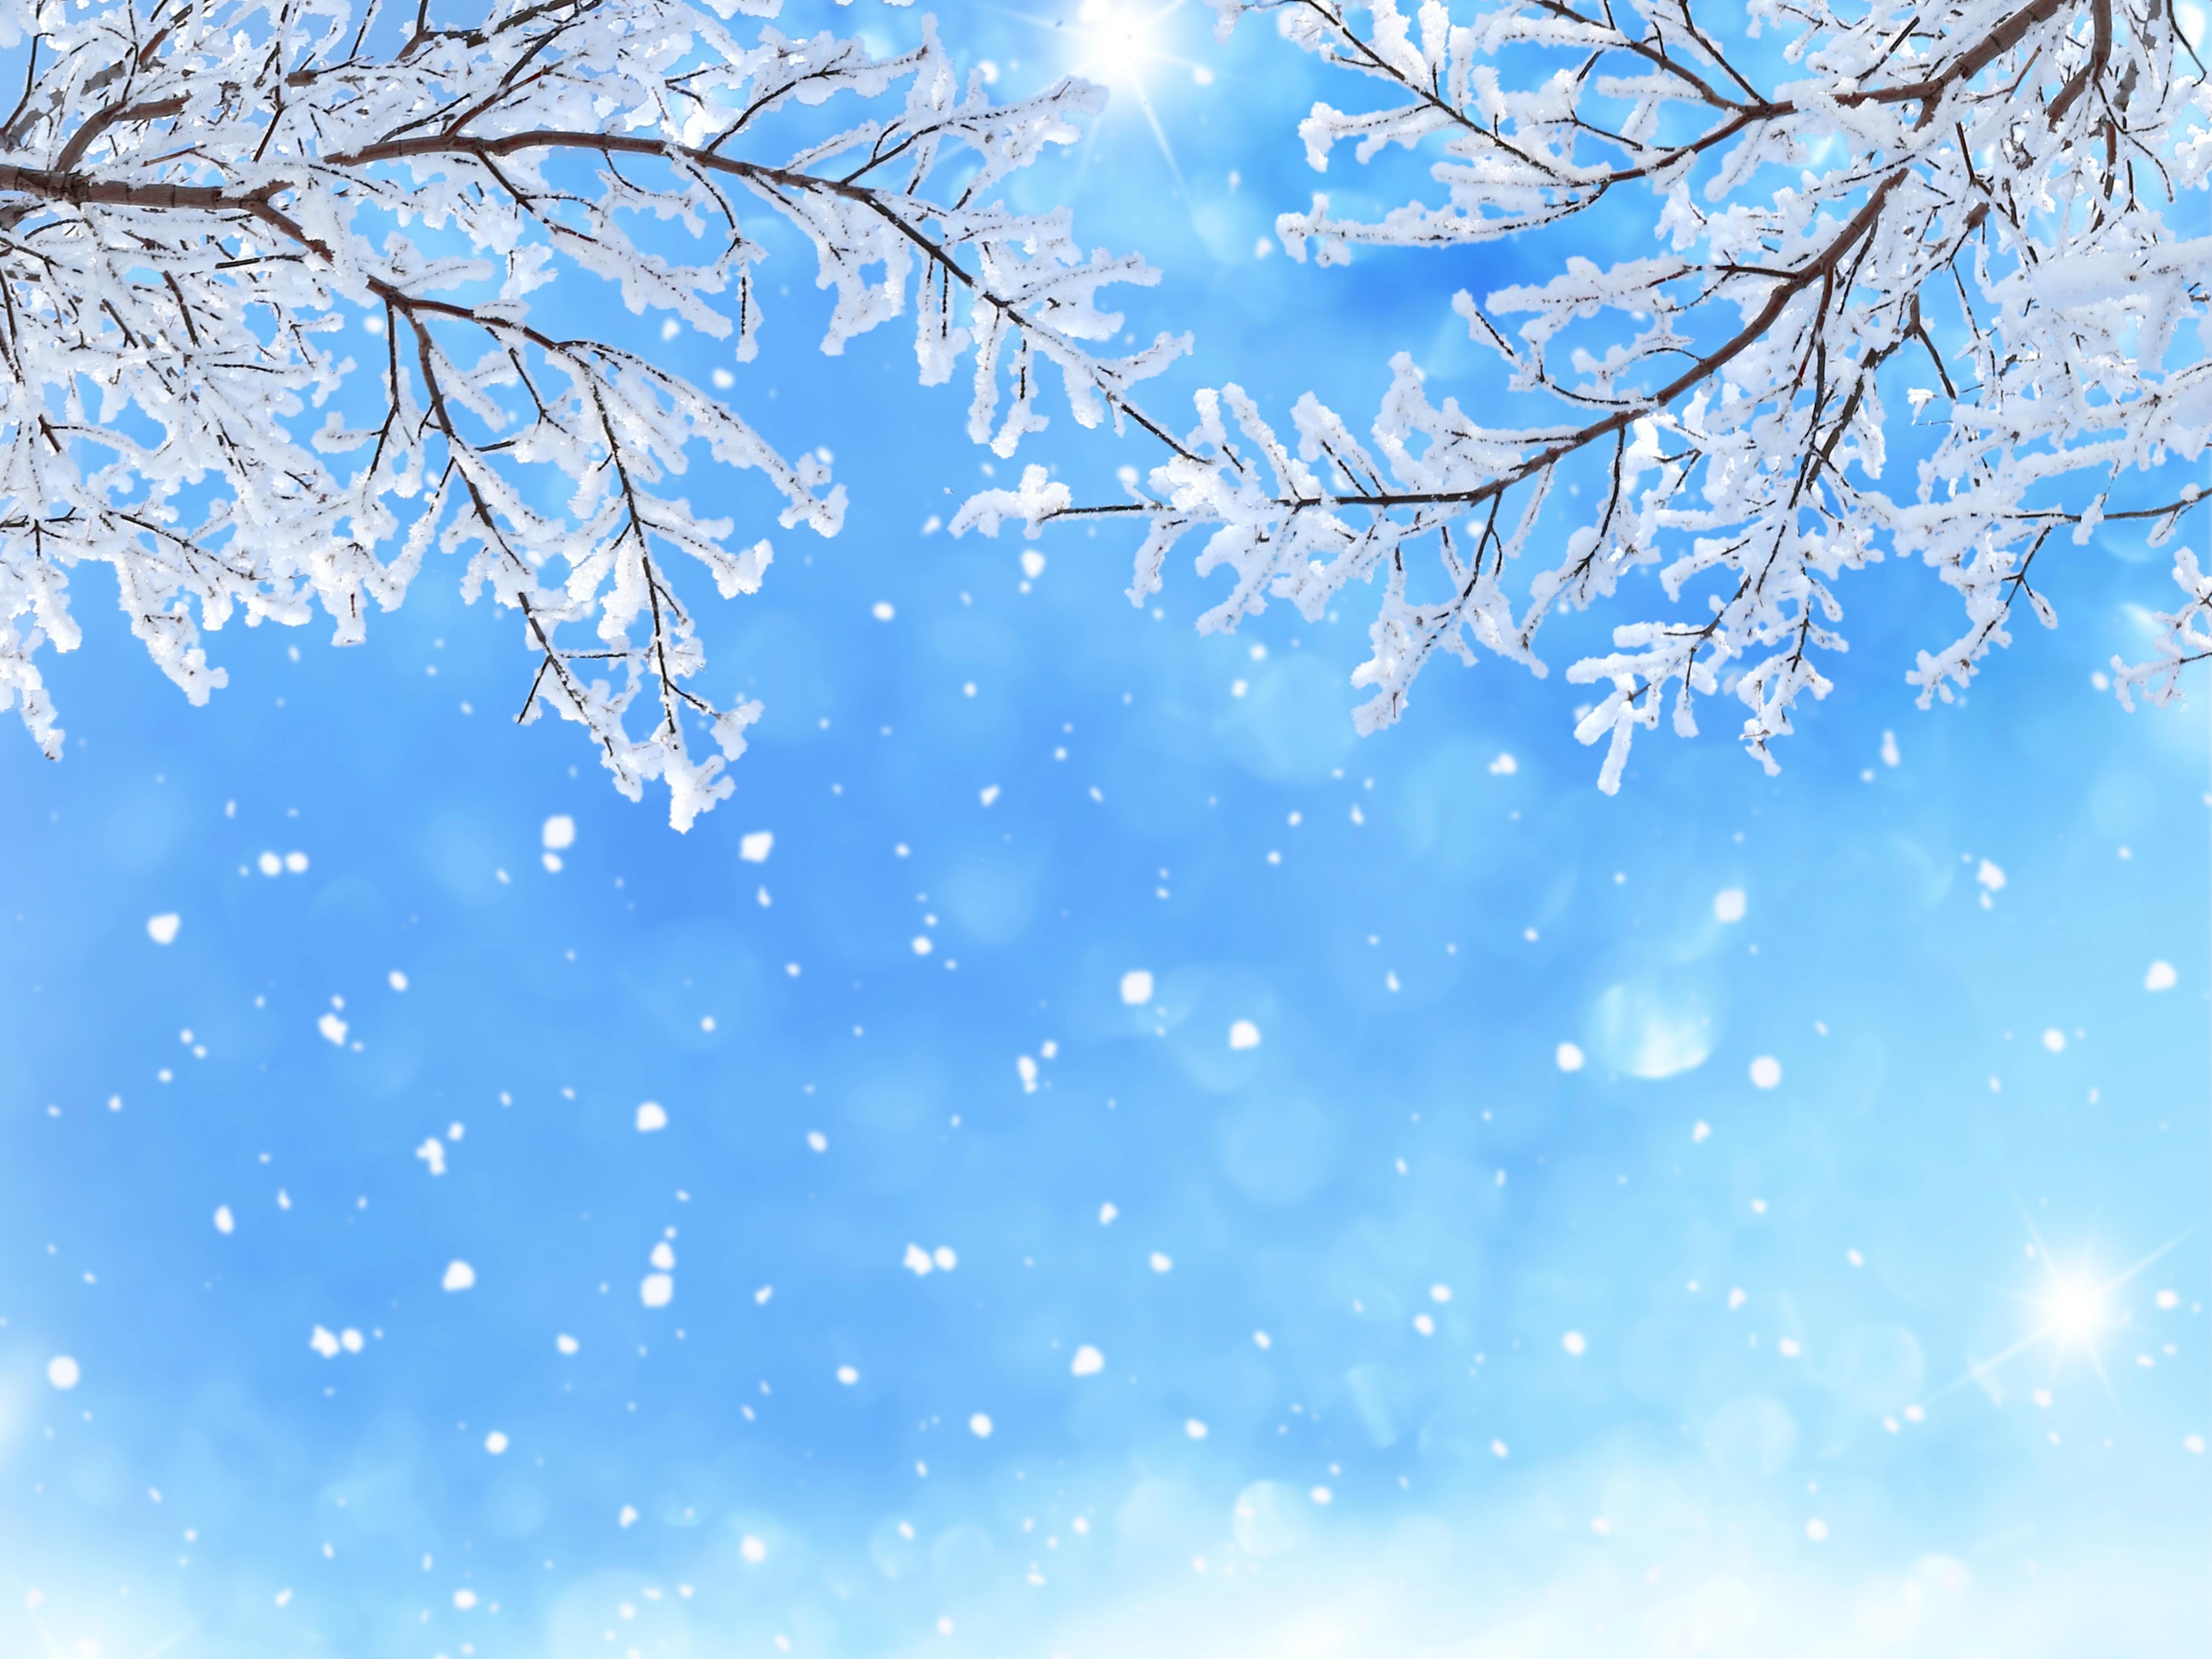 Winter Branches in the Snow 5k Retina Ultra HD Wallpaper